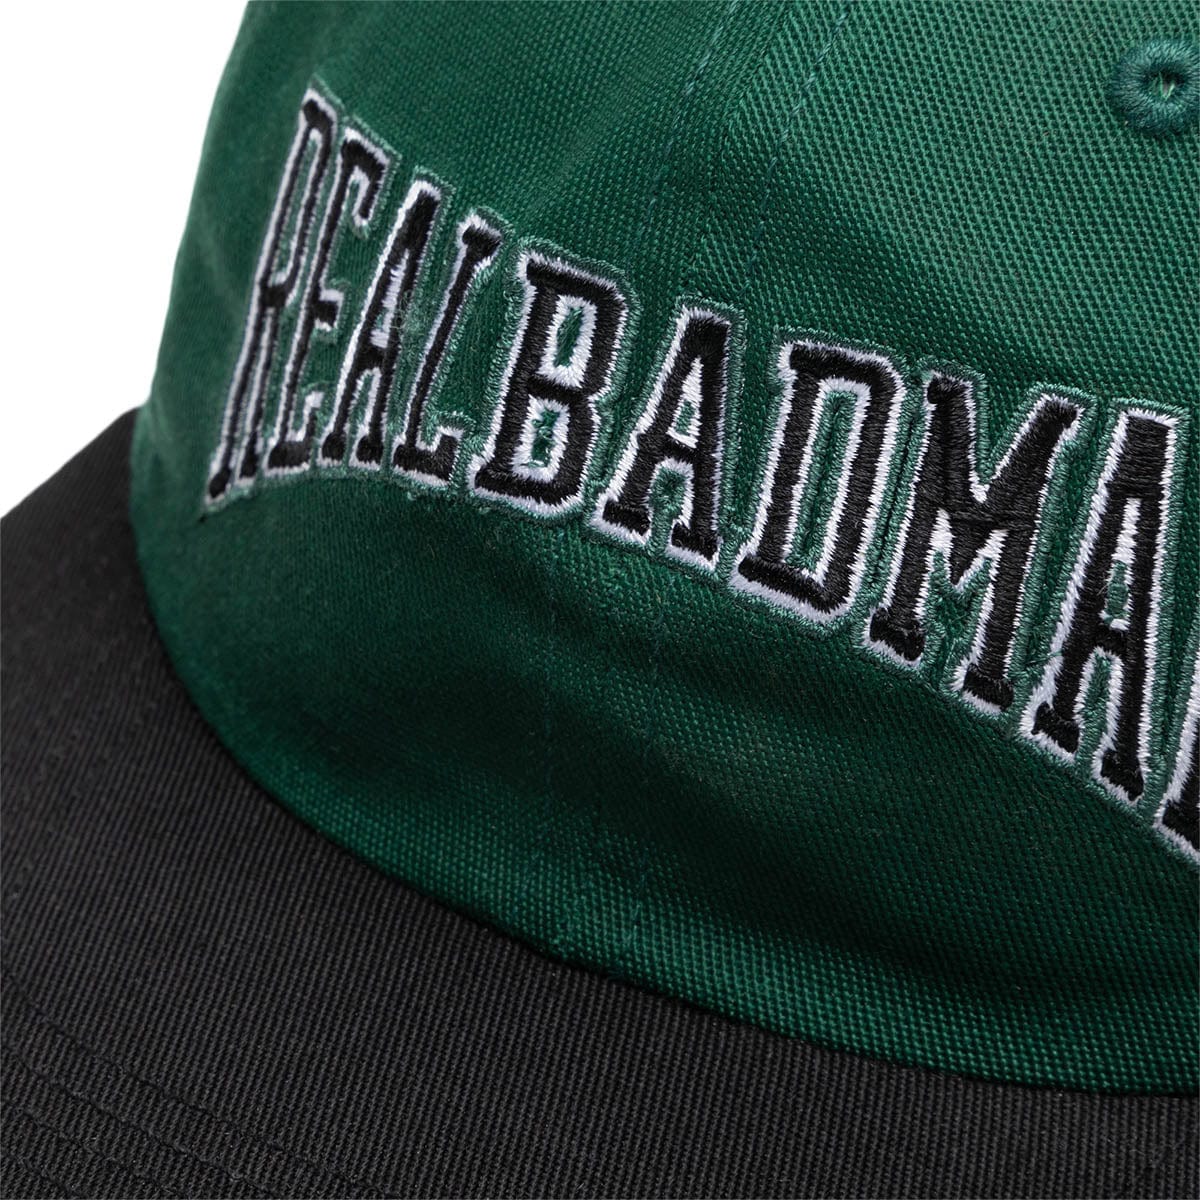 Real Bad Man Headwear GREEN / O/S TEAM RBM CAP